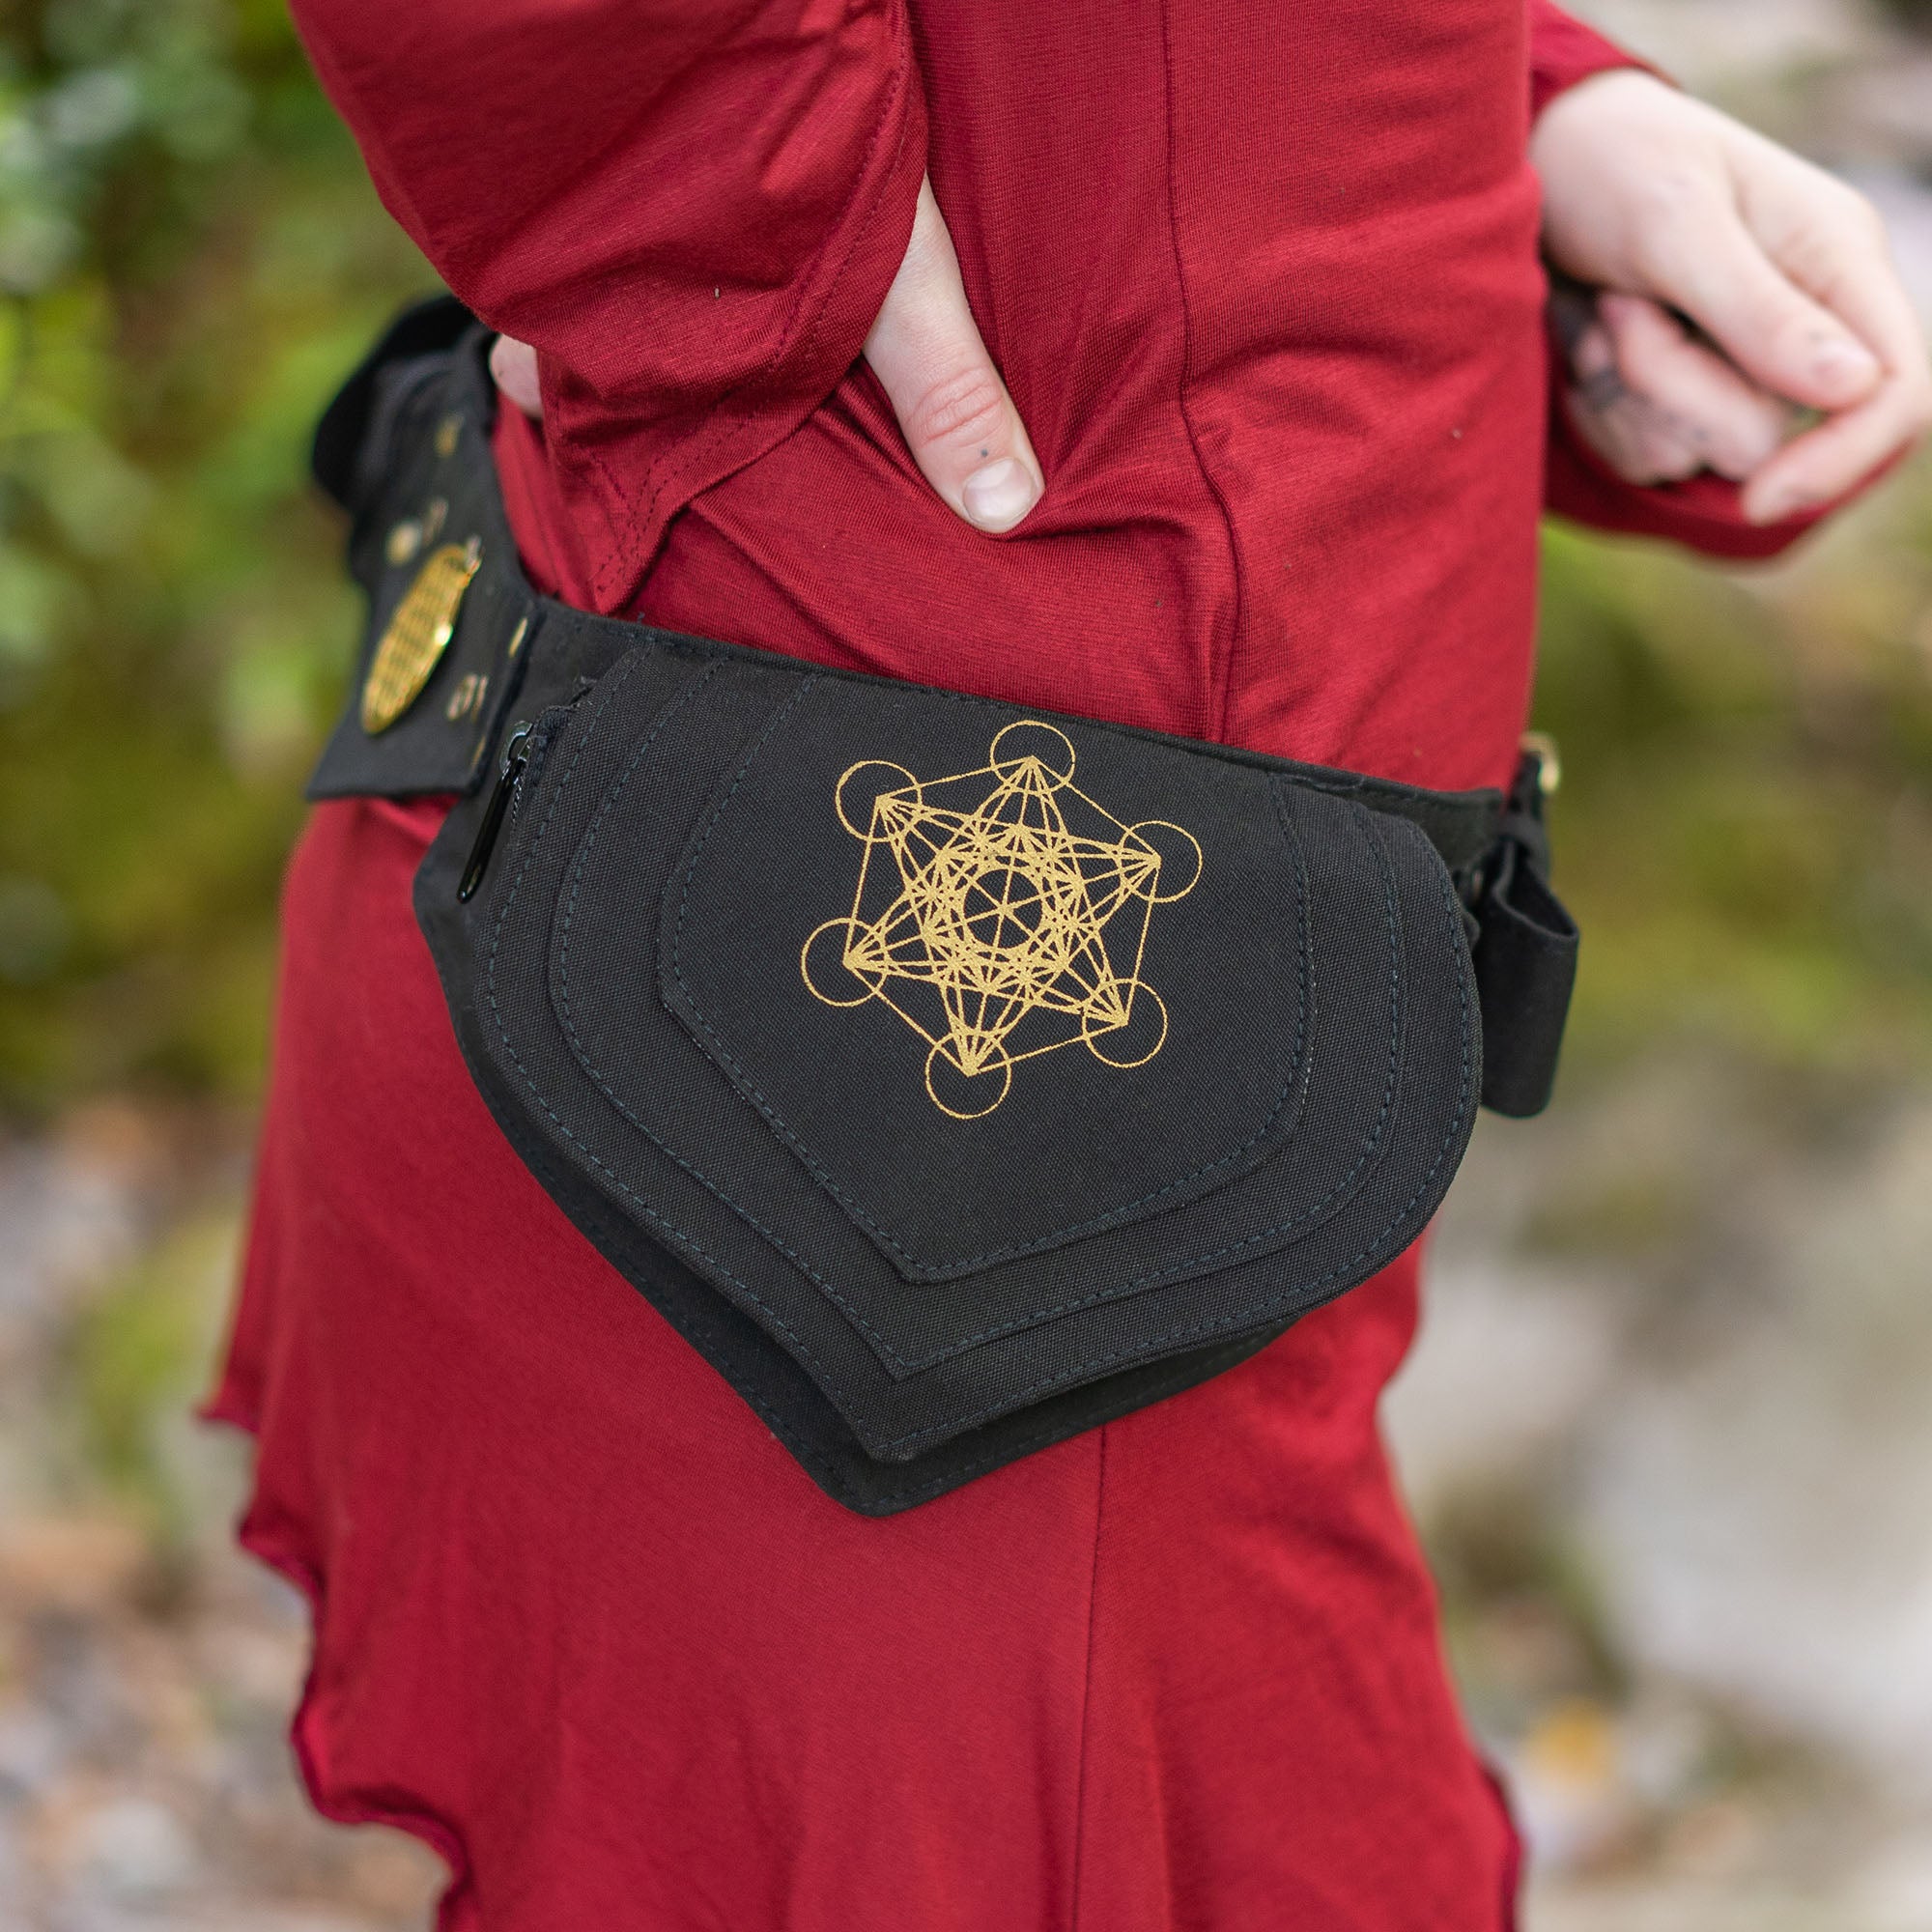 Medieval-Boho-Leather-Utility-Belt-Bag-Steampunk-Waist-Phone-Pouch